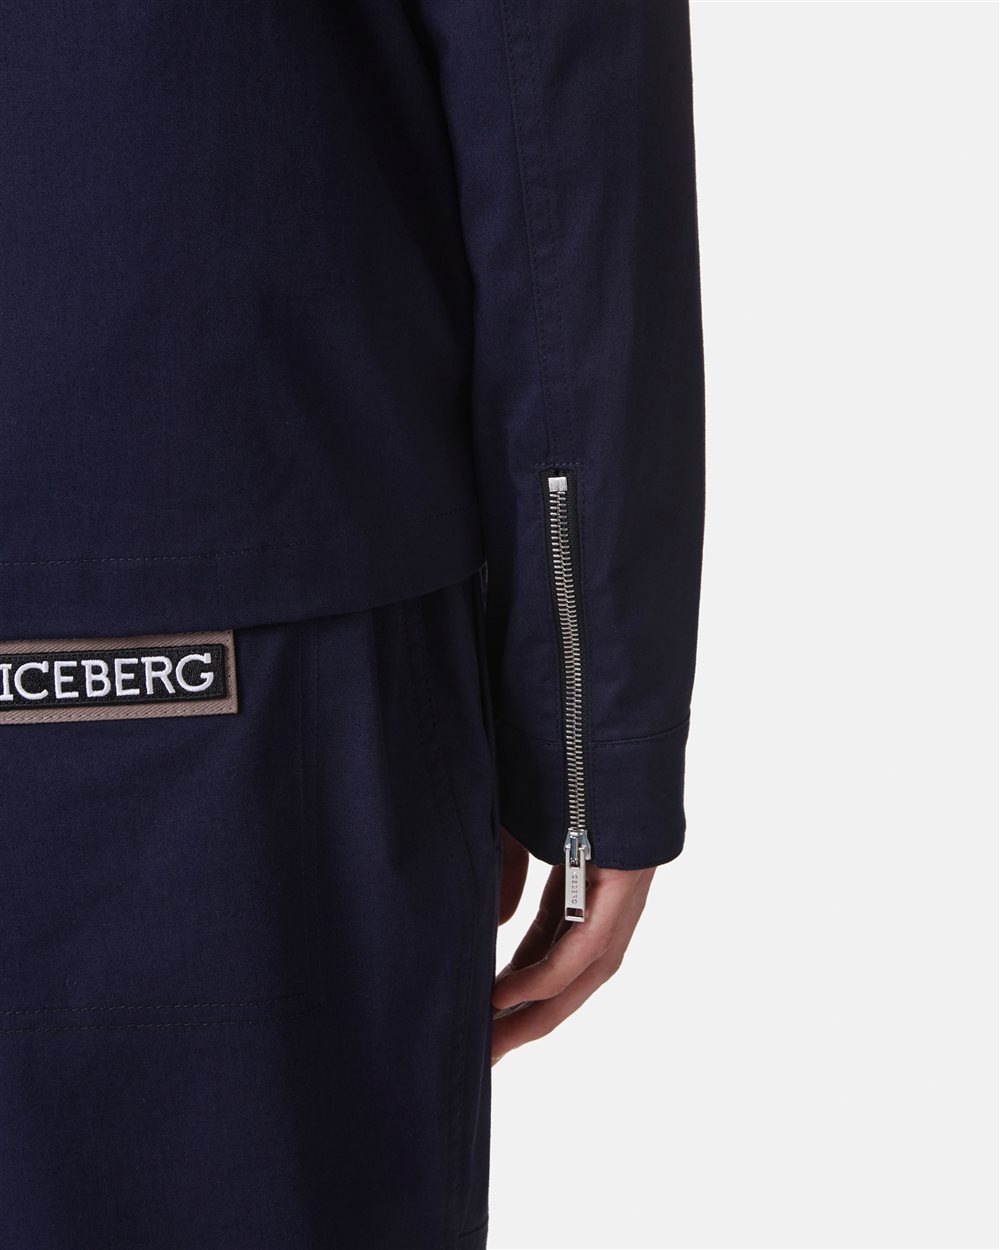 Jacket with logo - Iceberg - Official Website